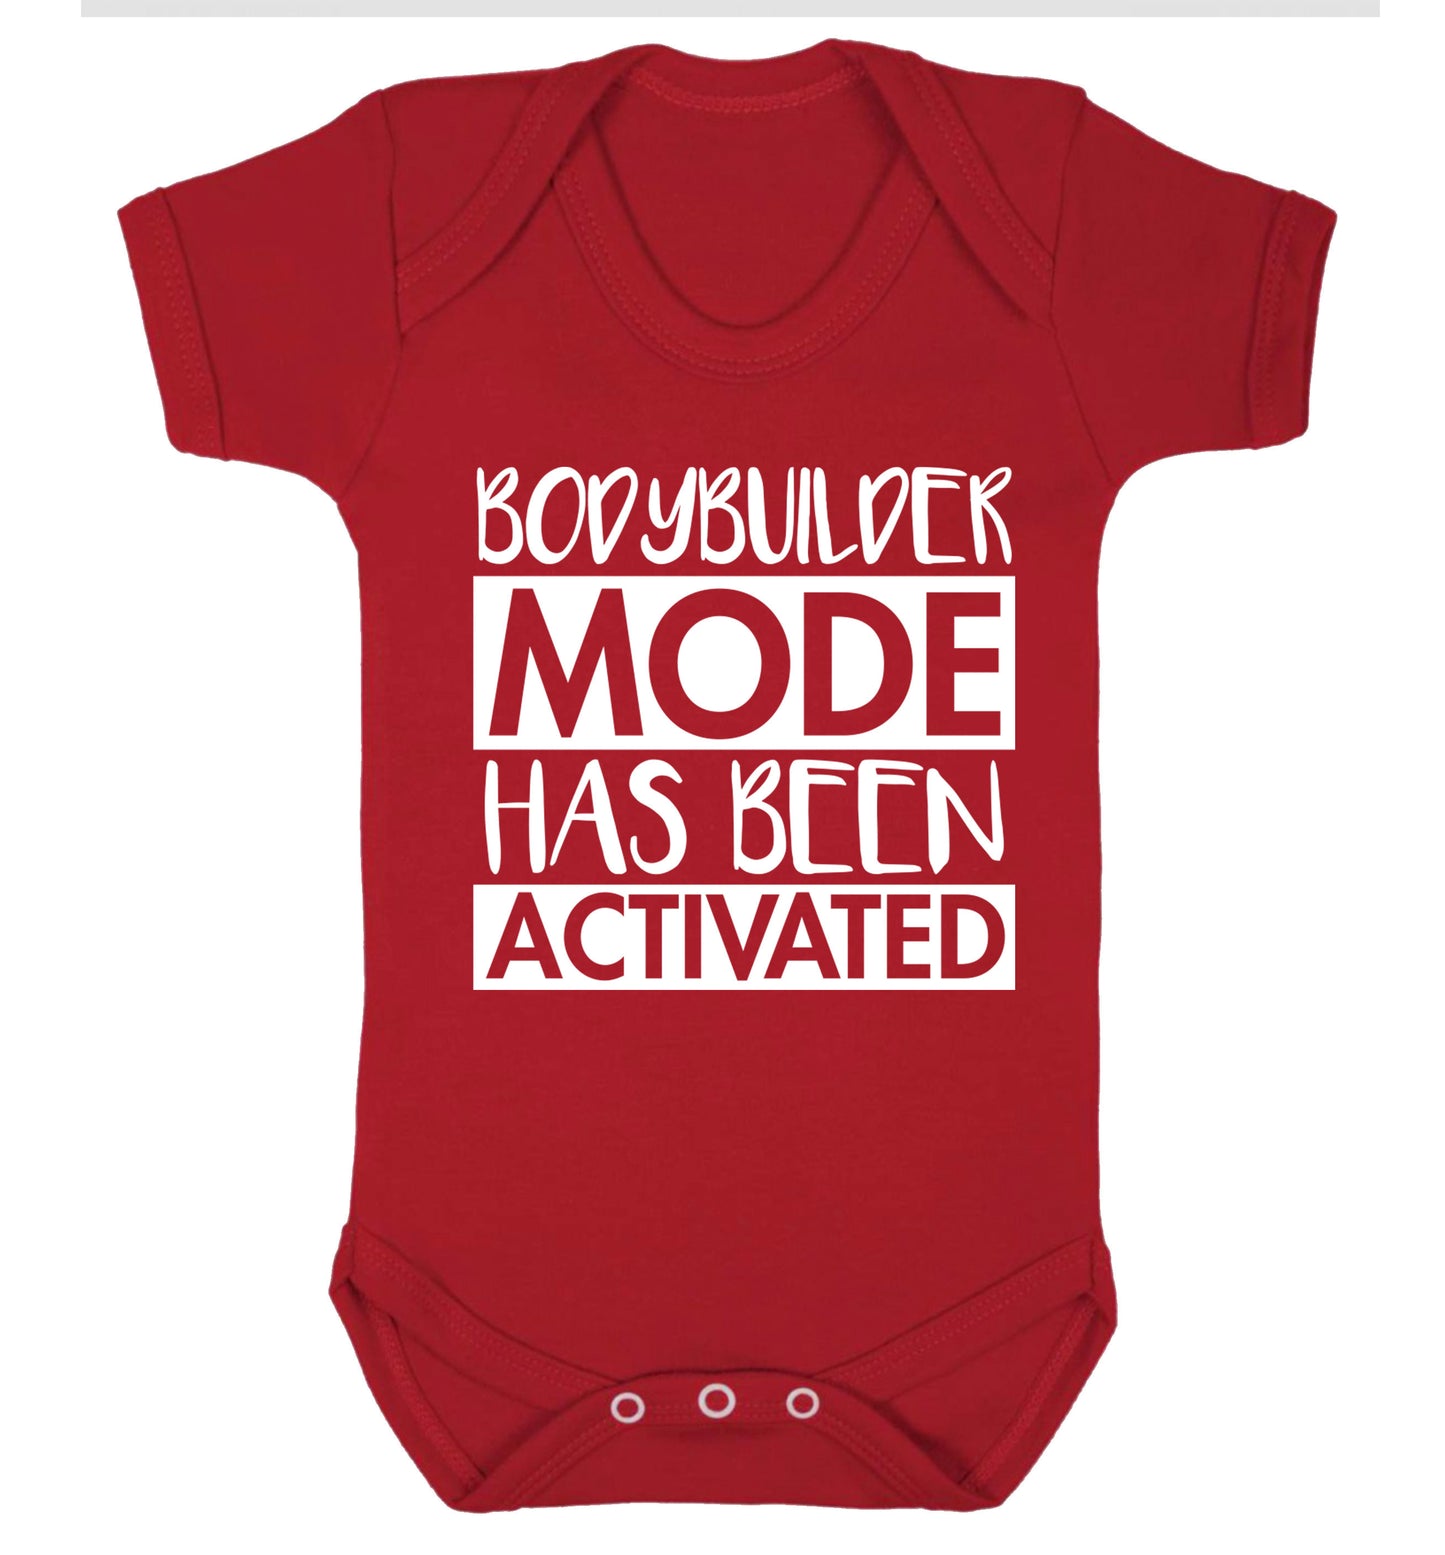 Bodybuilder mode activated Baby Vest red 18-24 months